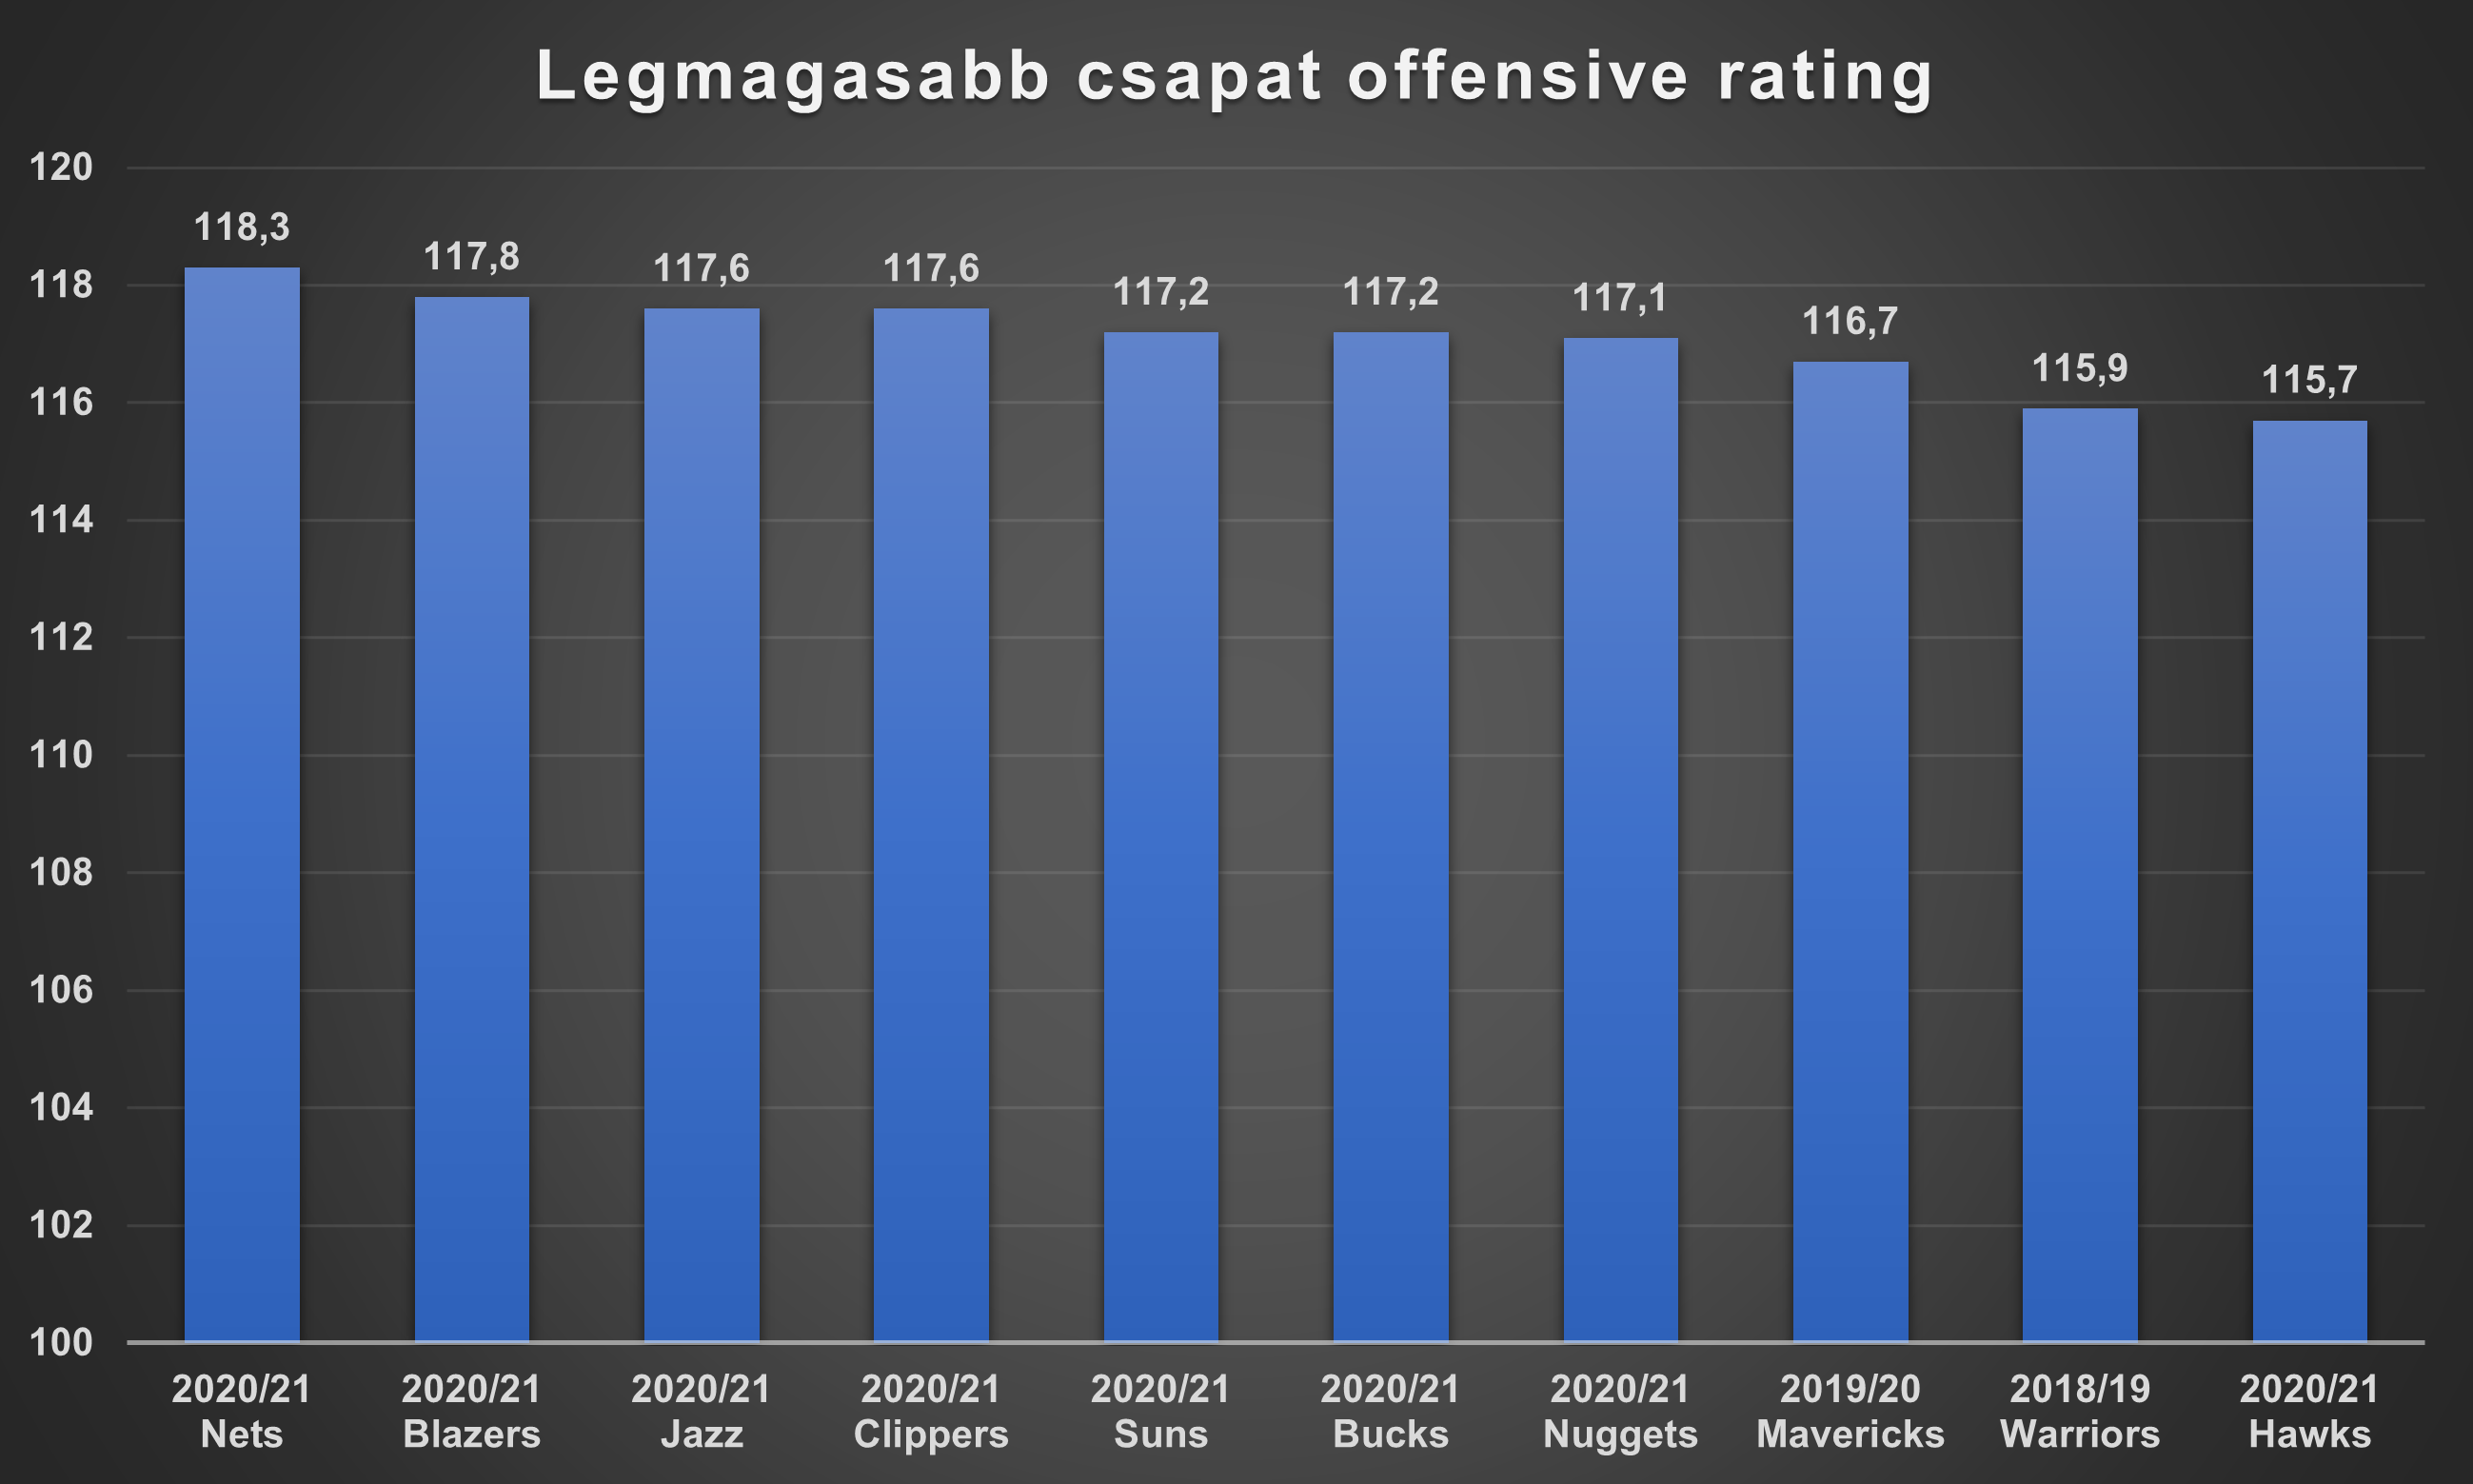 legmagasabb_csapat_offensive_rating.png